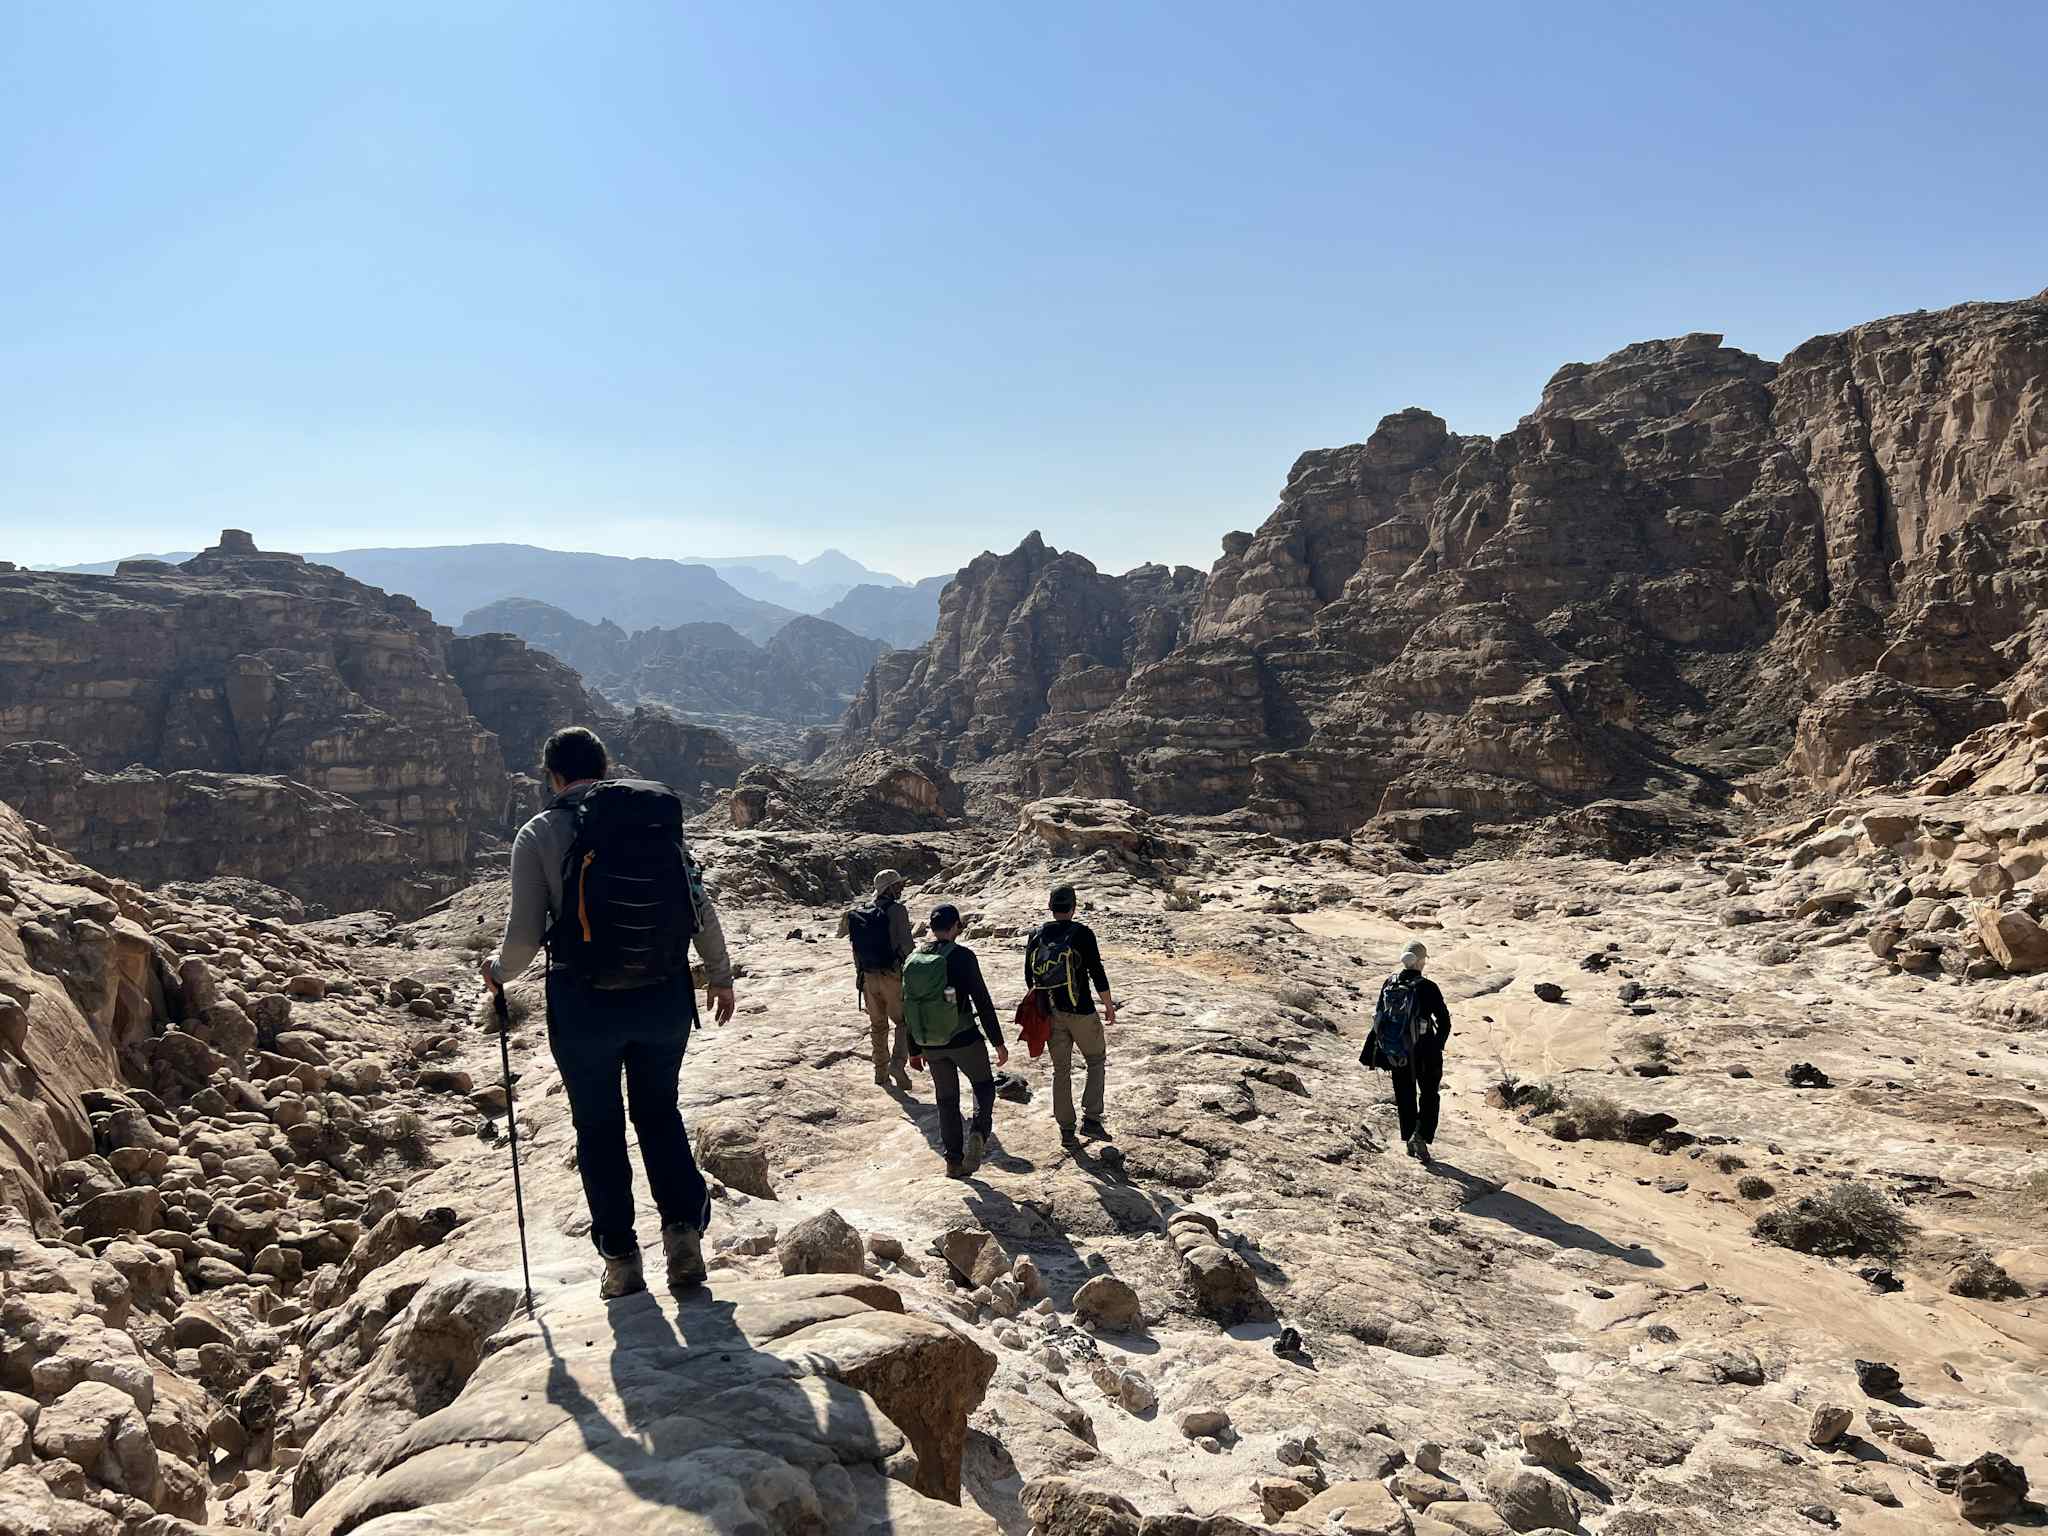 Trekking the Jordan Trail, Wadi Aheimar to Wadi Gseib section. 
Host image - Experience Jordan